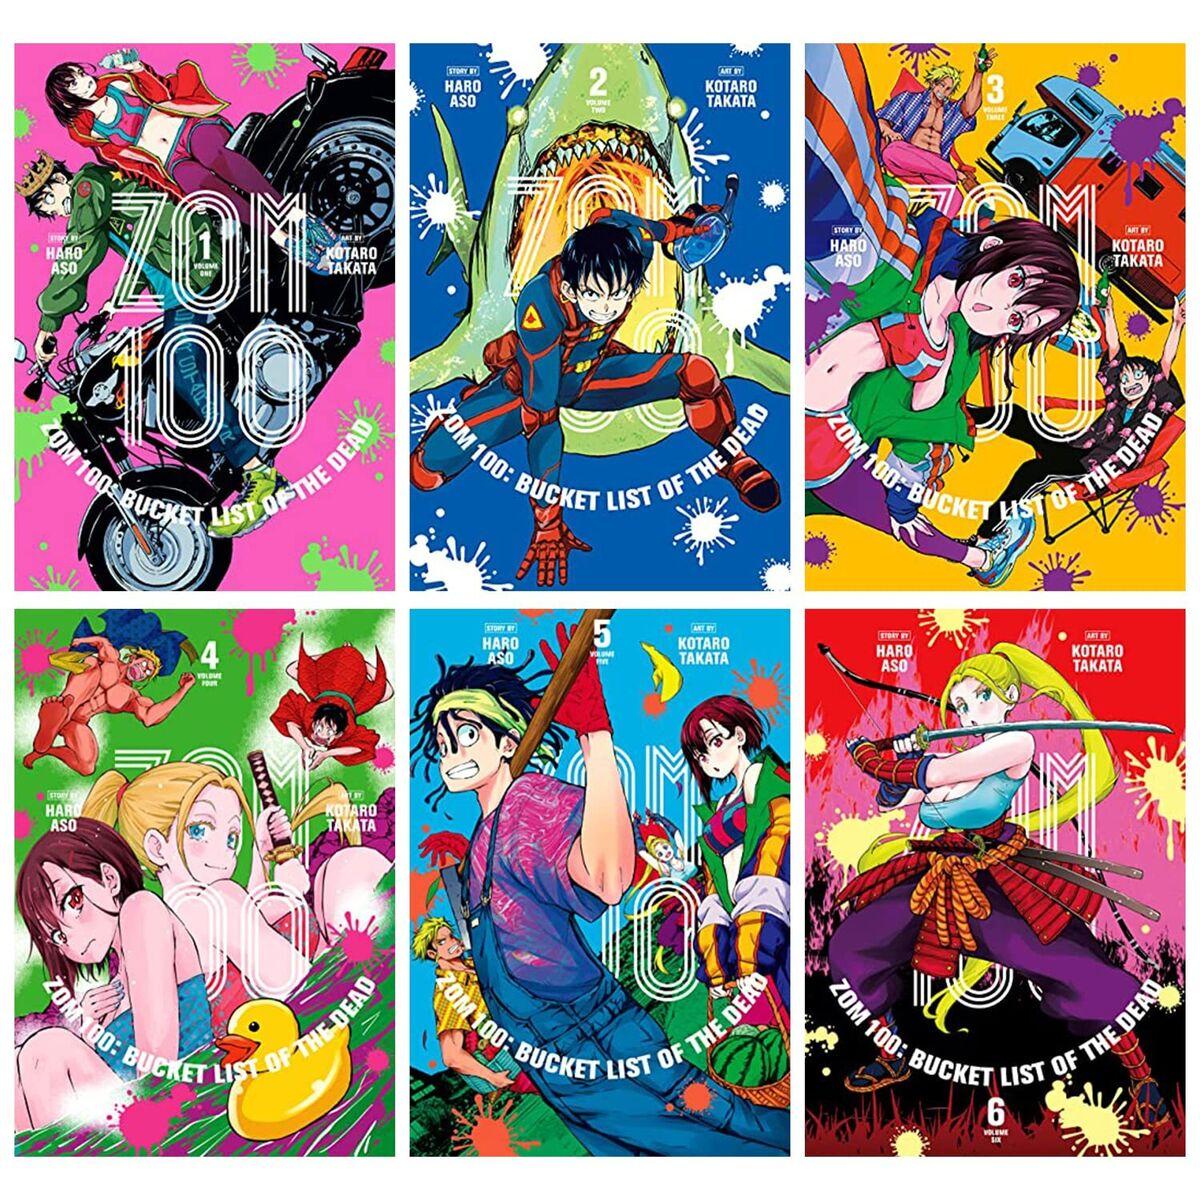 Zom 100 Bucket List of the Dead Manga Set Vol 1 6 eBay